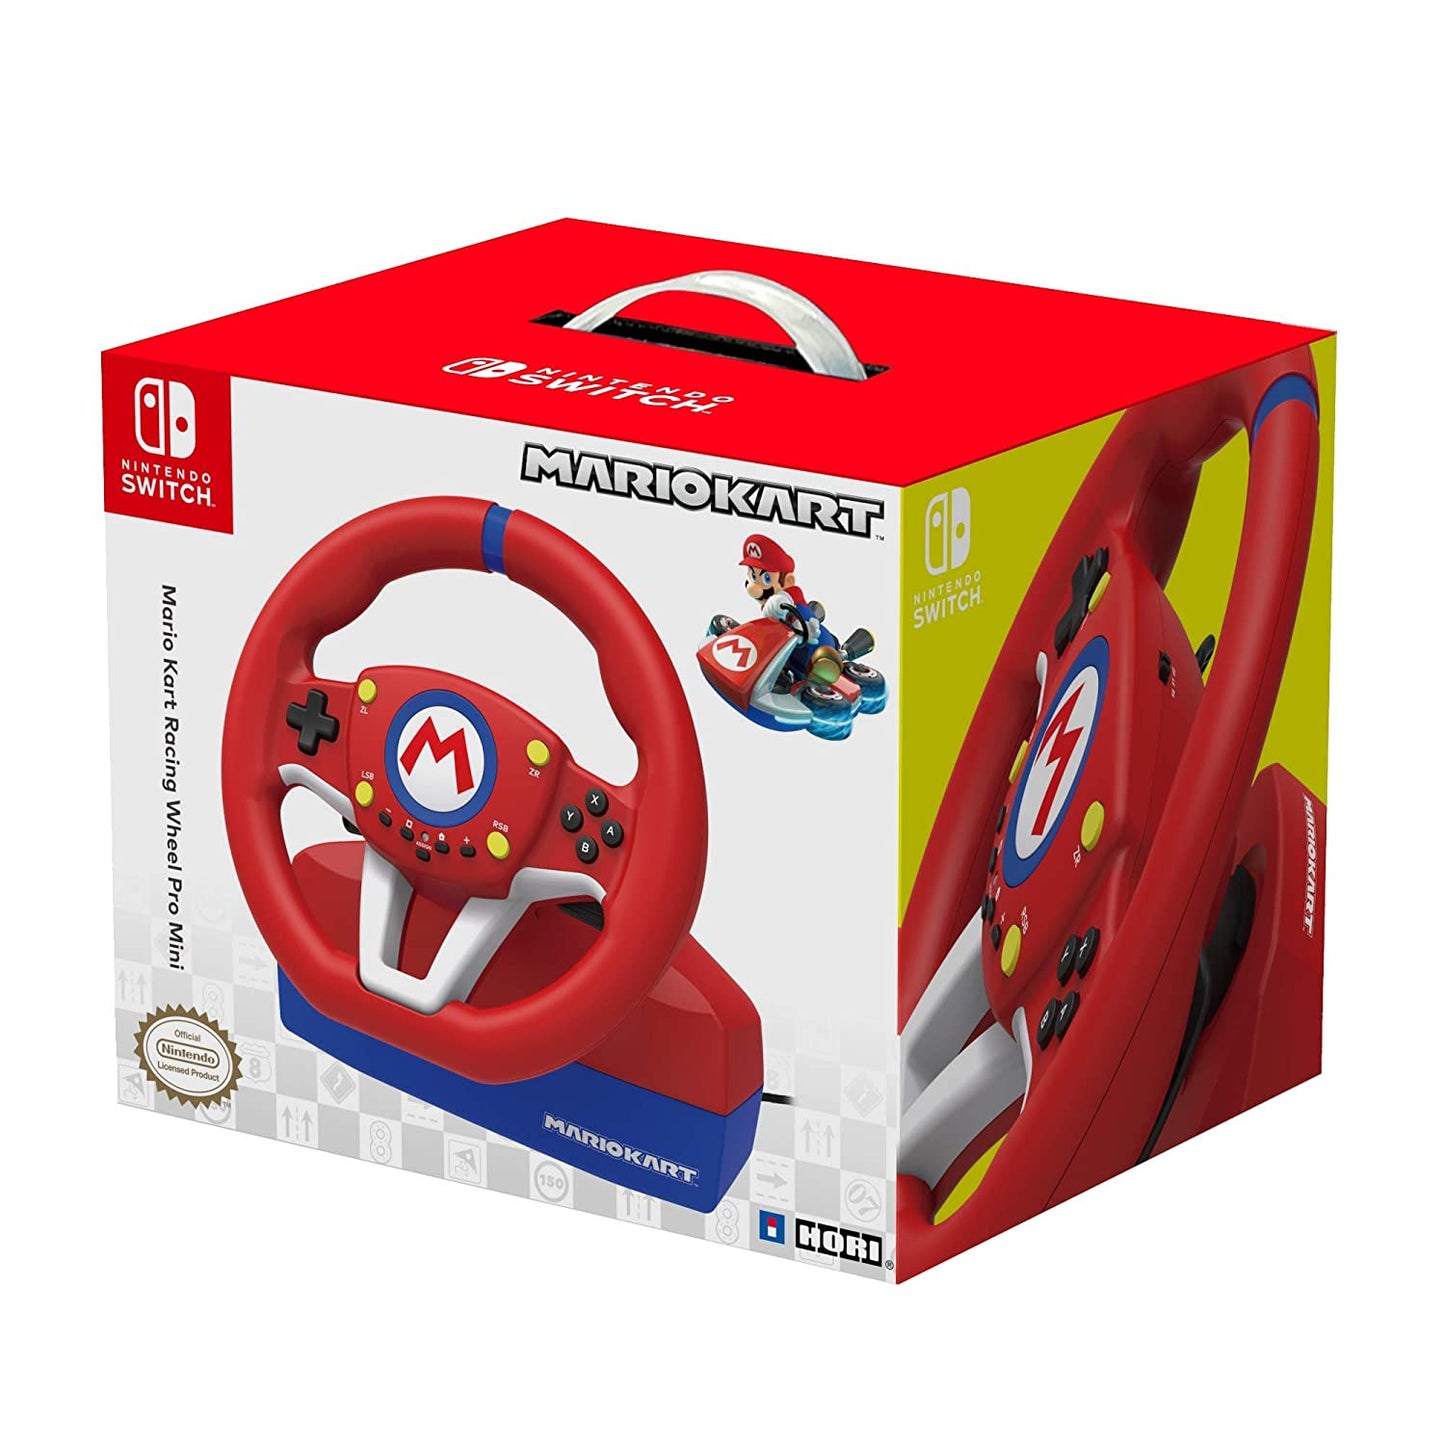 Hori Nintendo Switch Mario Kart Racing Wheel with Mario Kart 8 Deluxe Game Bundle